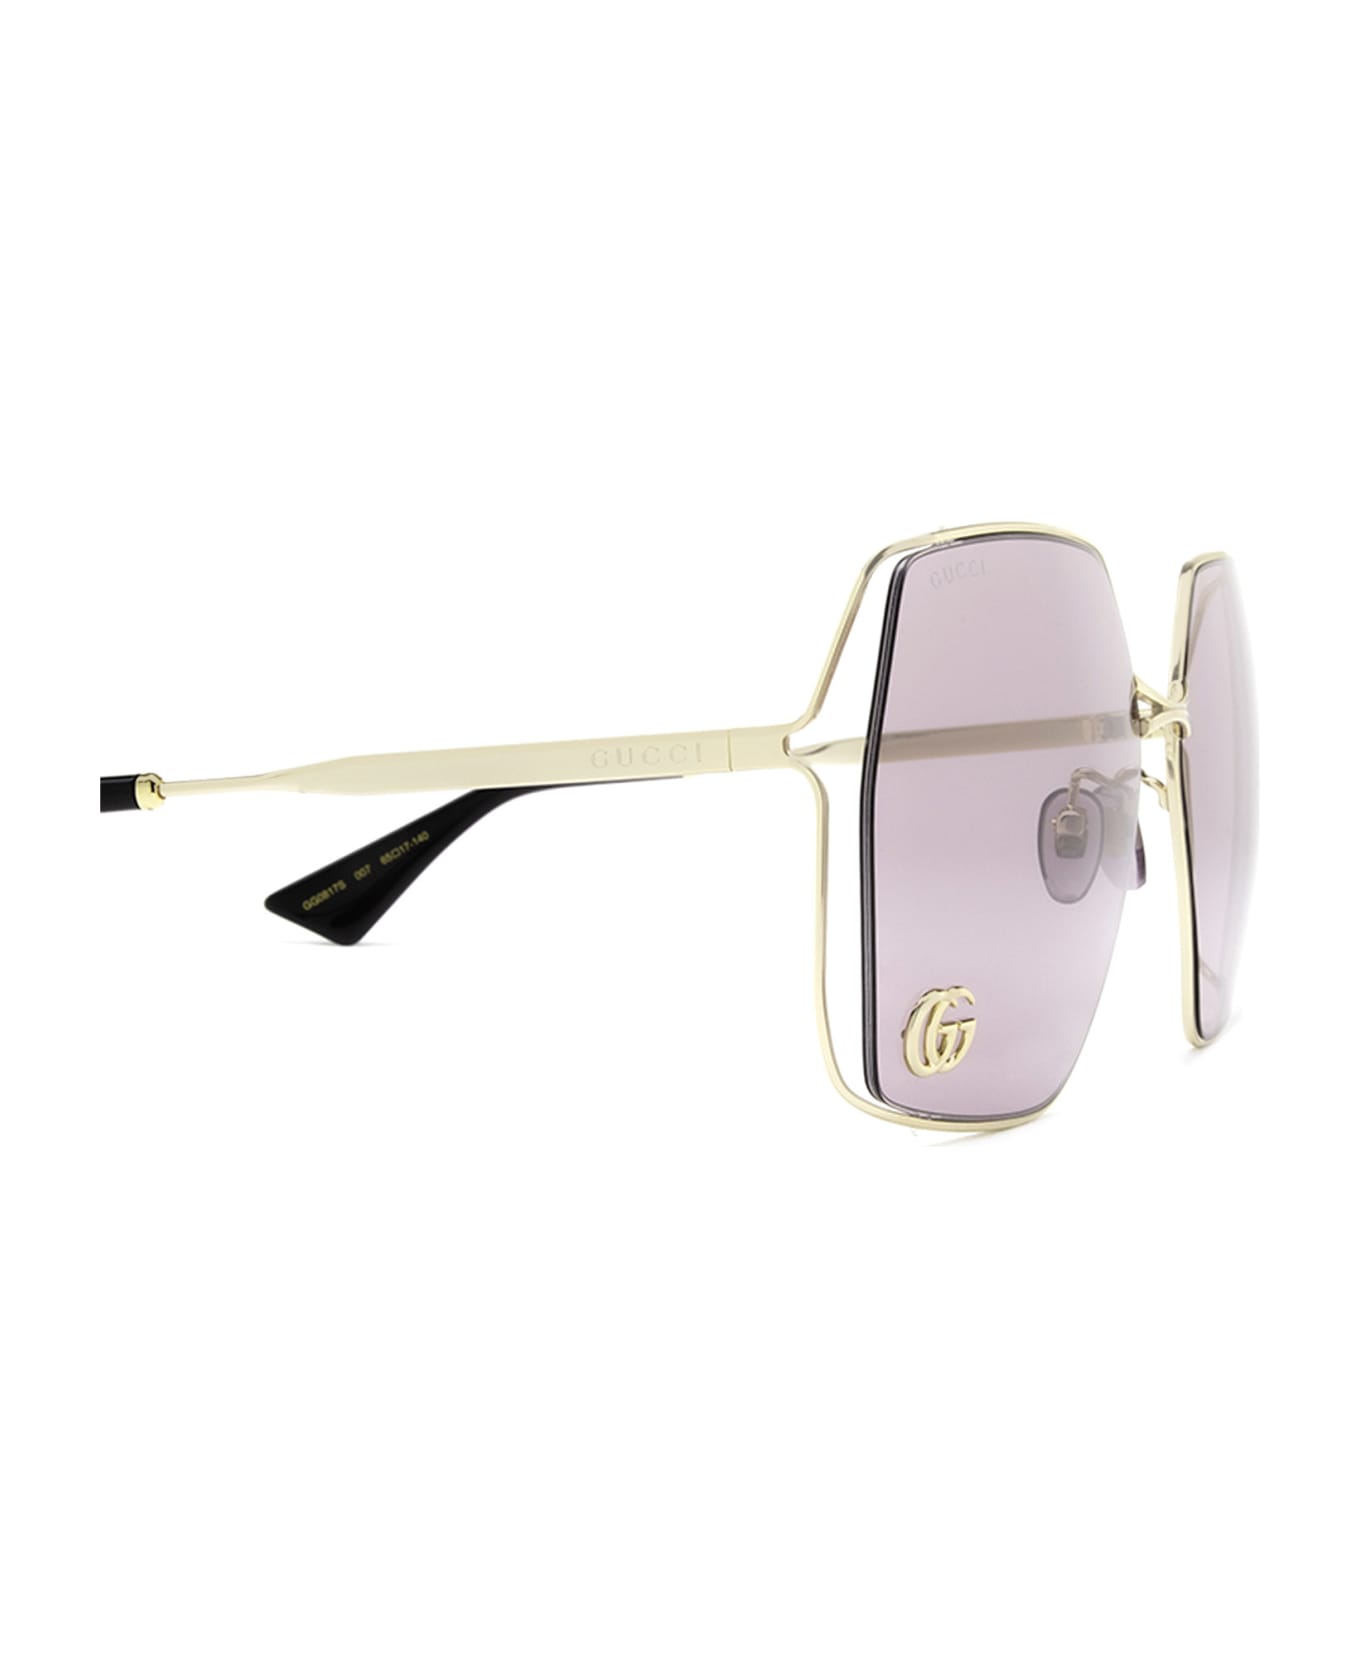 Gucci Eyewear Gg0817s Gold Sunglasses - Gold